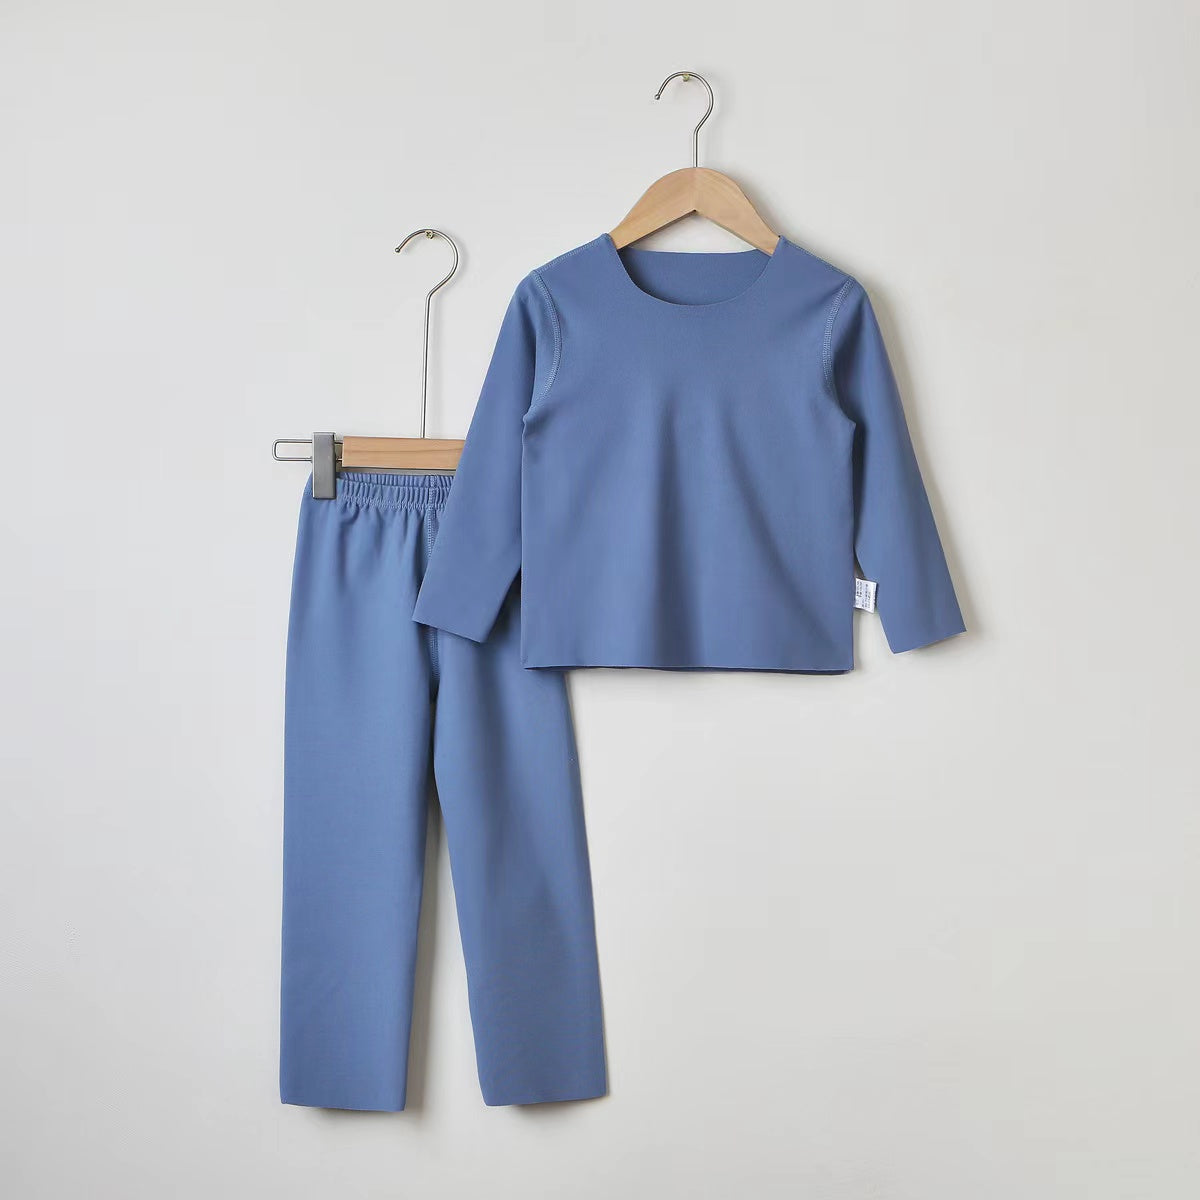 Kids Solid DE Velvet Fabric Round Collar Long-Sleeved Pajamas Sets